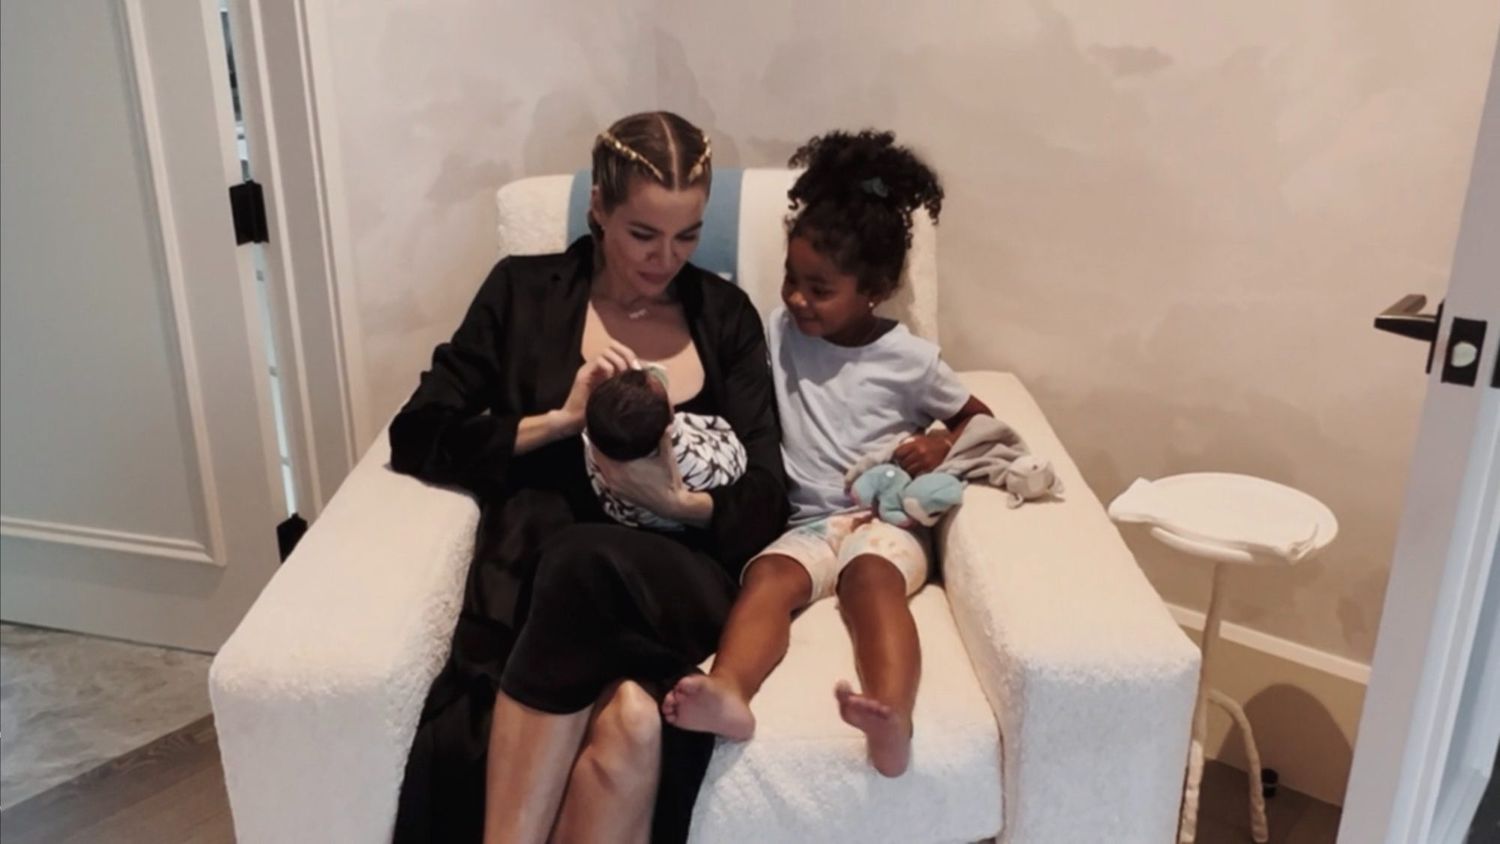 Khloe Kardashian introduces newborn son to daughter true. Credit: Hulu